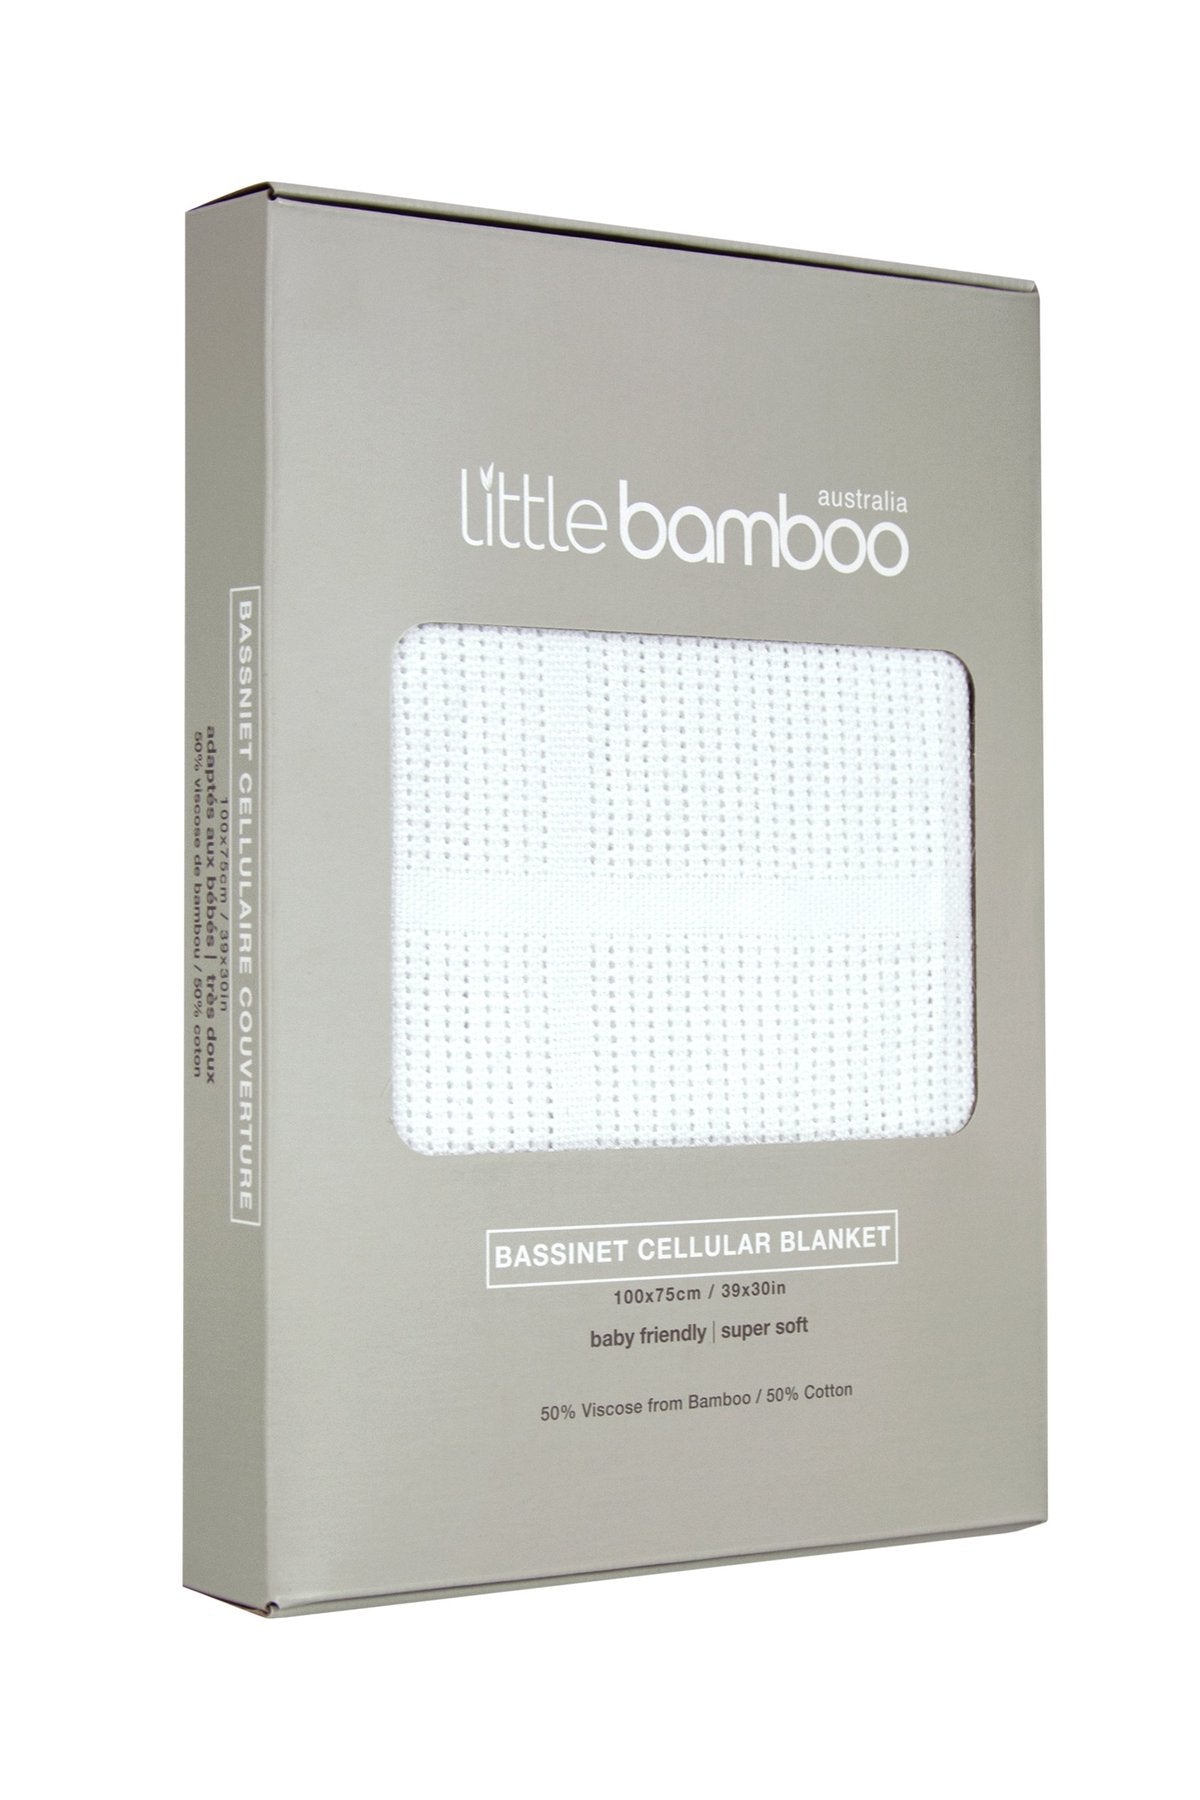 Little Bamboo Bassinet/Cradle Cellular Blanket NEW